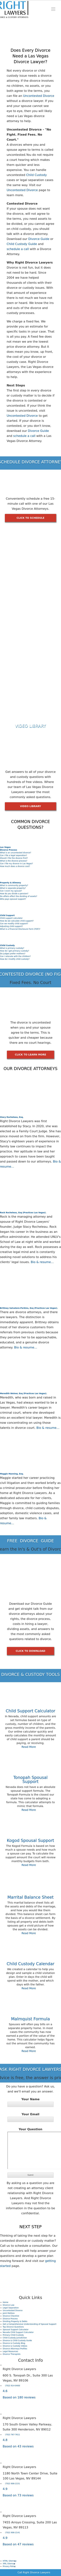 Right Divorce Lawyers - Las Vegas NV Lawyers